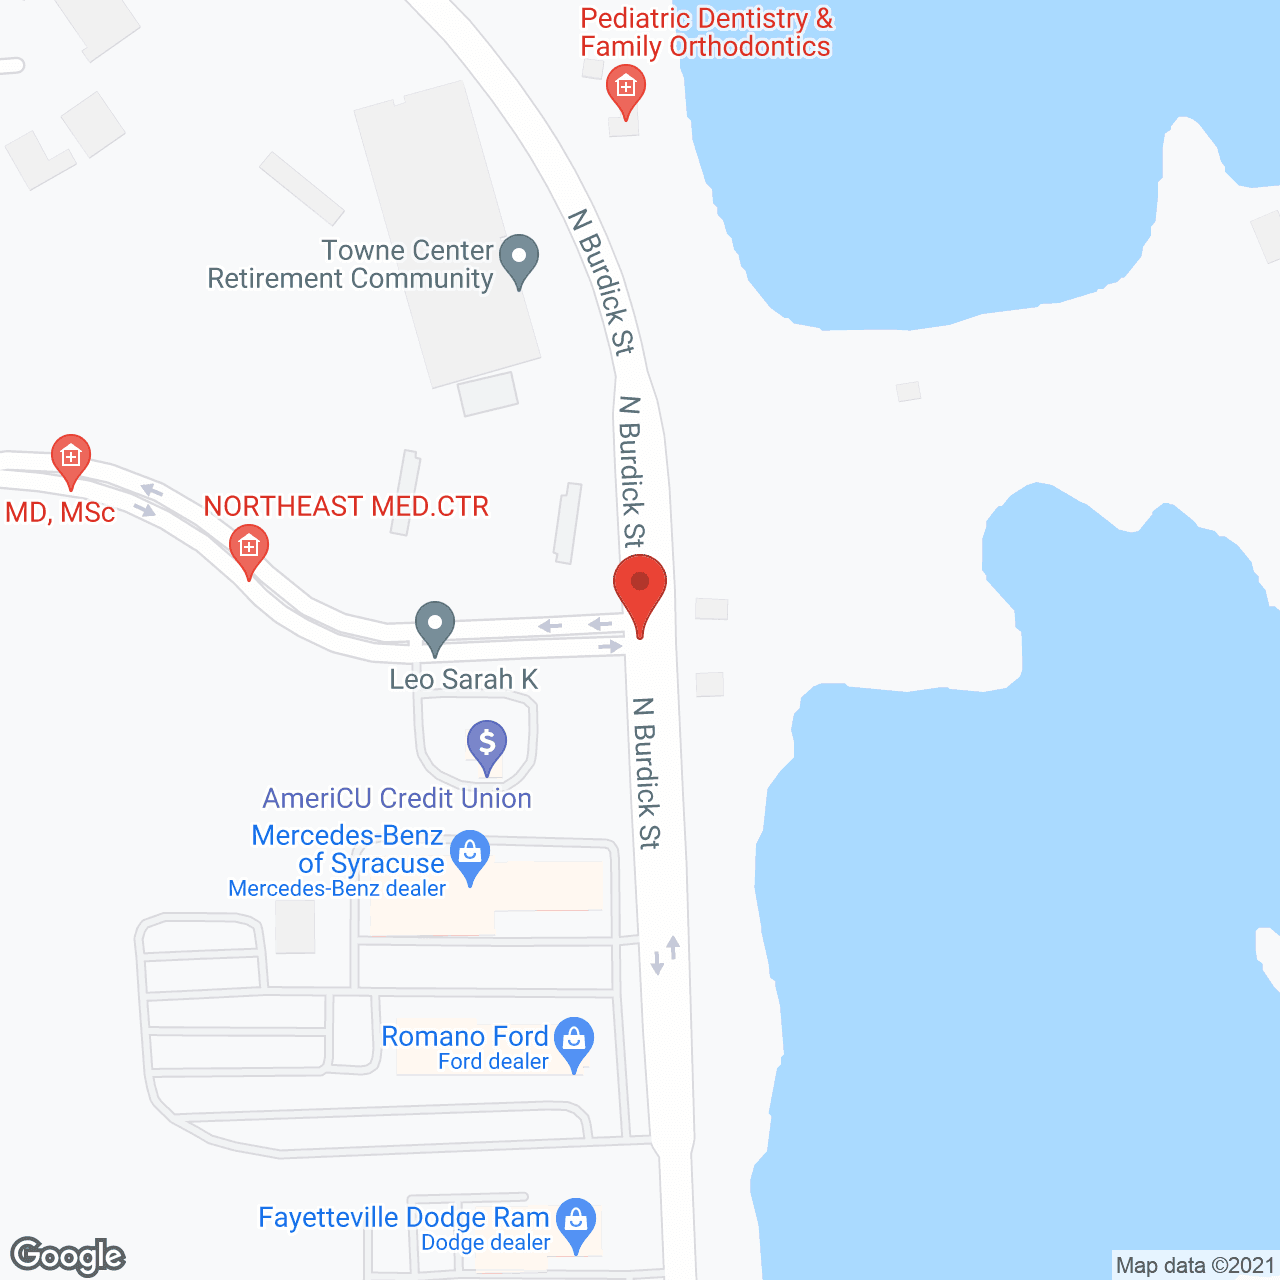 Towne Center Retirement Community in google map